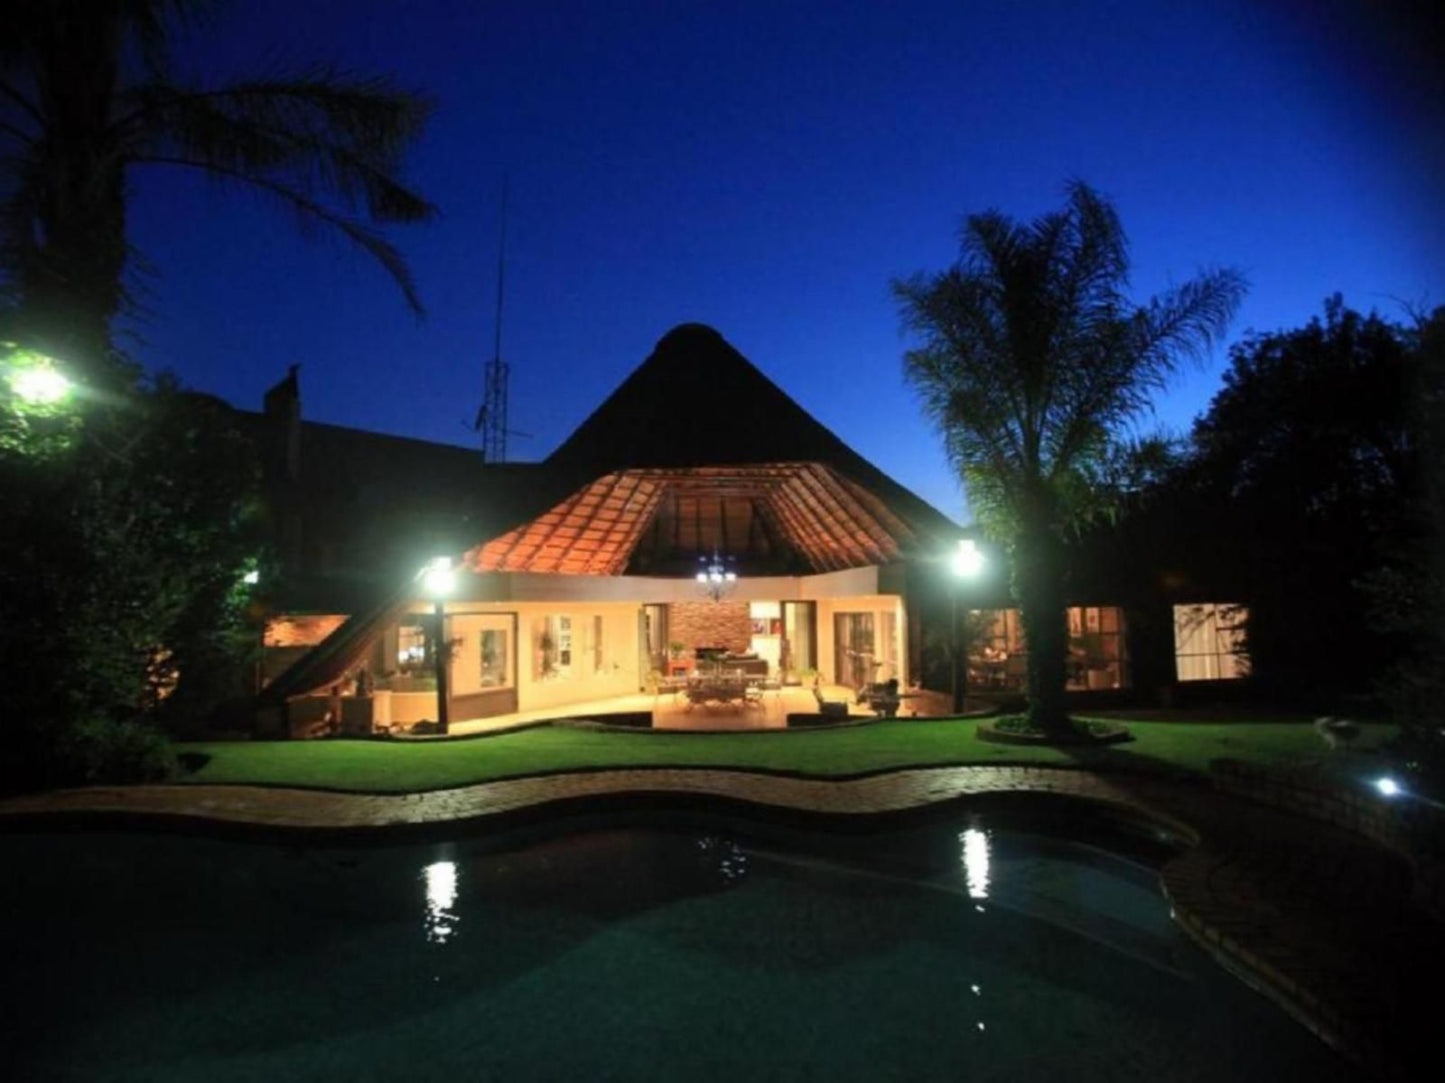 Andante Lodge Elardus Park Pretoria Tshwane Gauteng South Africa Palm Tree, Plant, Nature, Wood, Swimming Pool